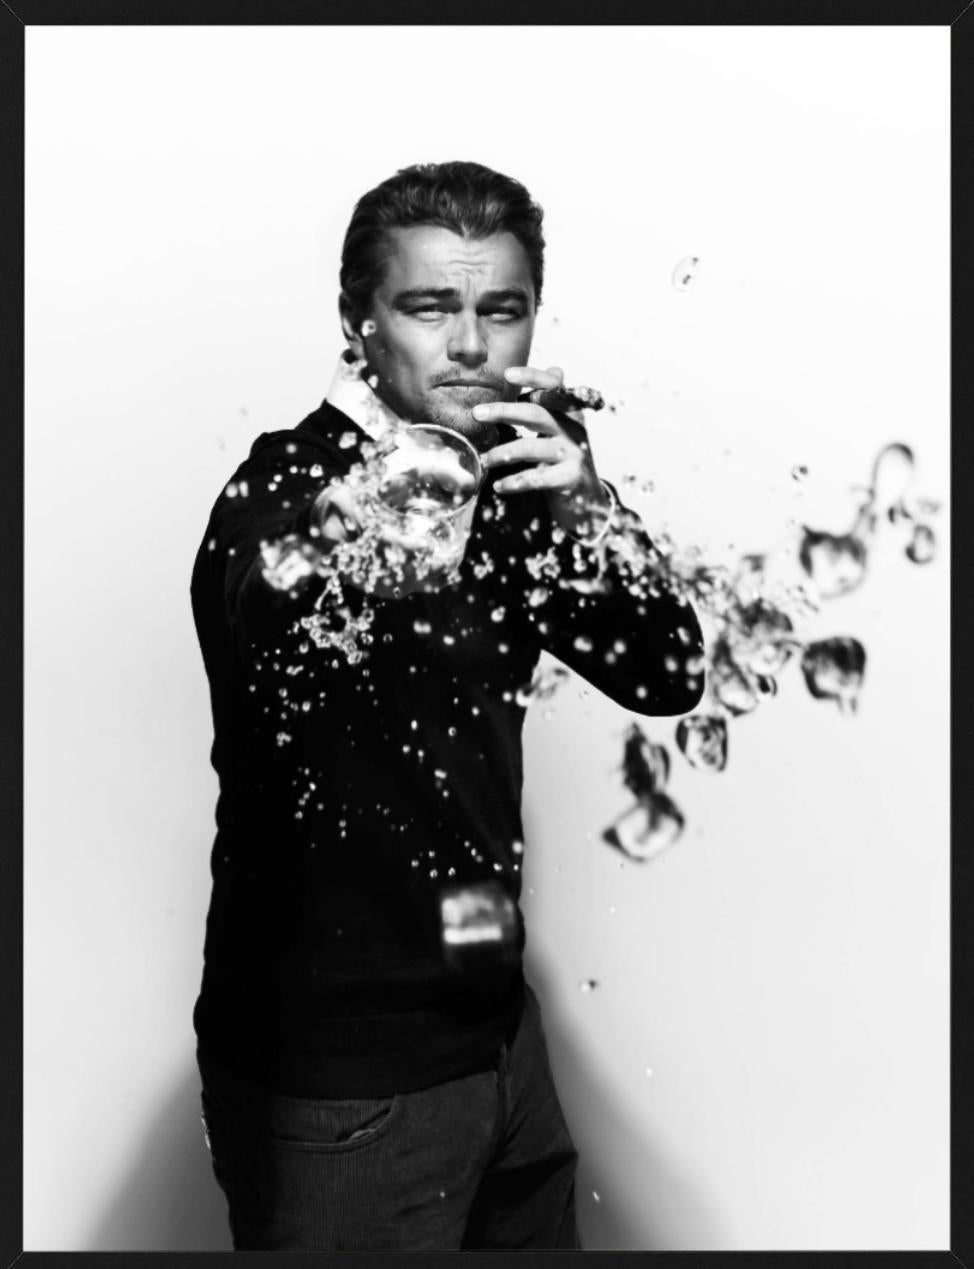 Leonardo DiCaprio spilling - portrait spilling drink, fine art photography, 2010 - Contemporary Photograph by Nigel Parry